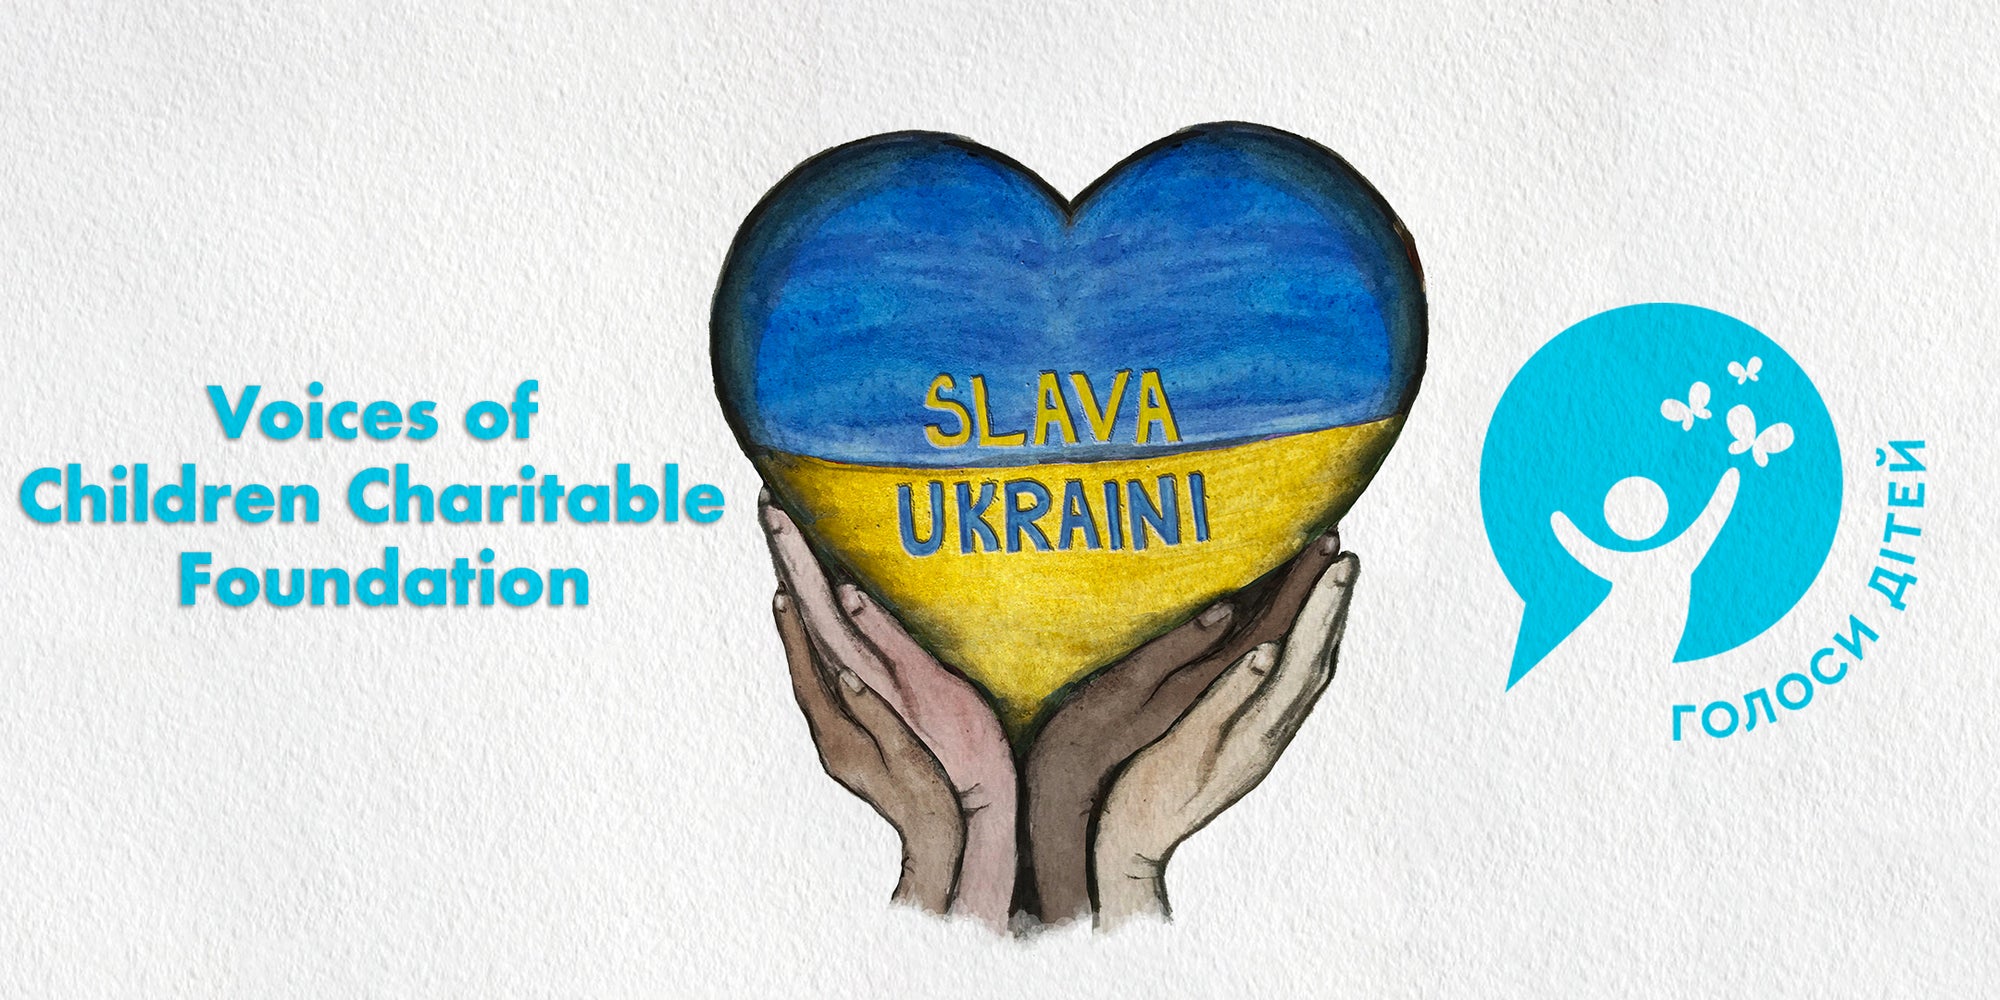 The Voices of Children Charitable Foundation - “Slava Ukraini”